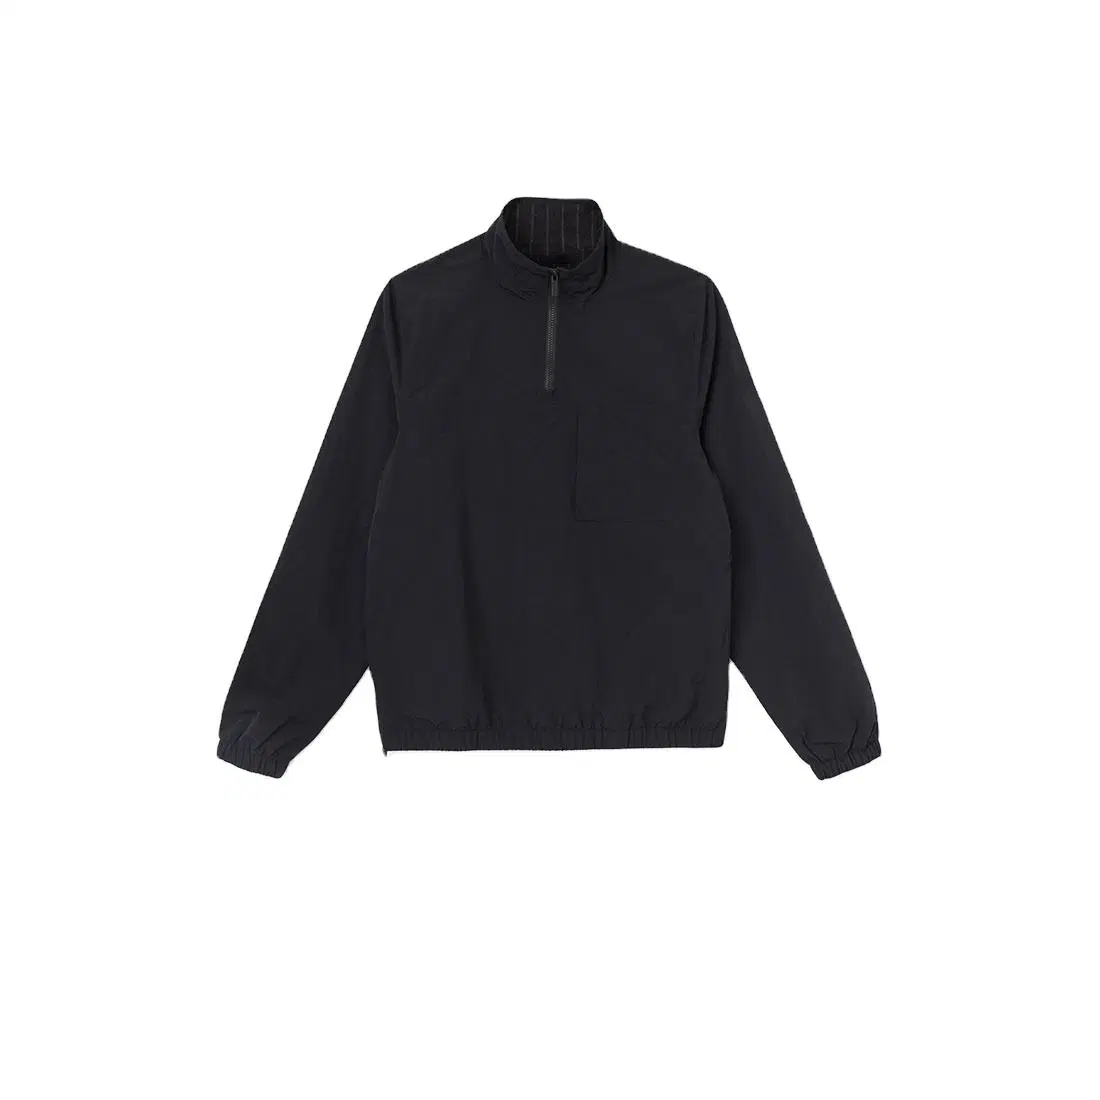 Ropa personalizada Negro Casual Plain Hombre ropa de punto Jersey suéter con Cremallera